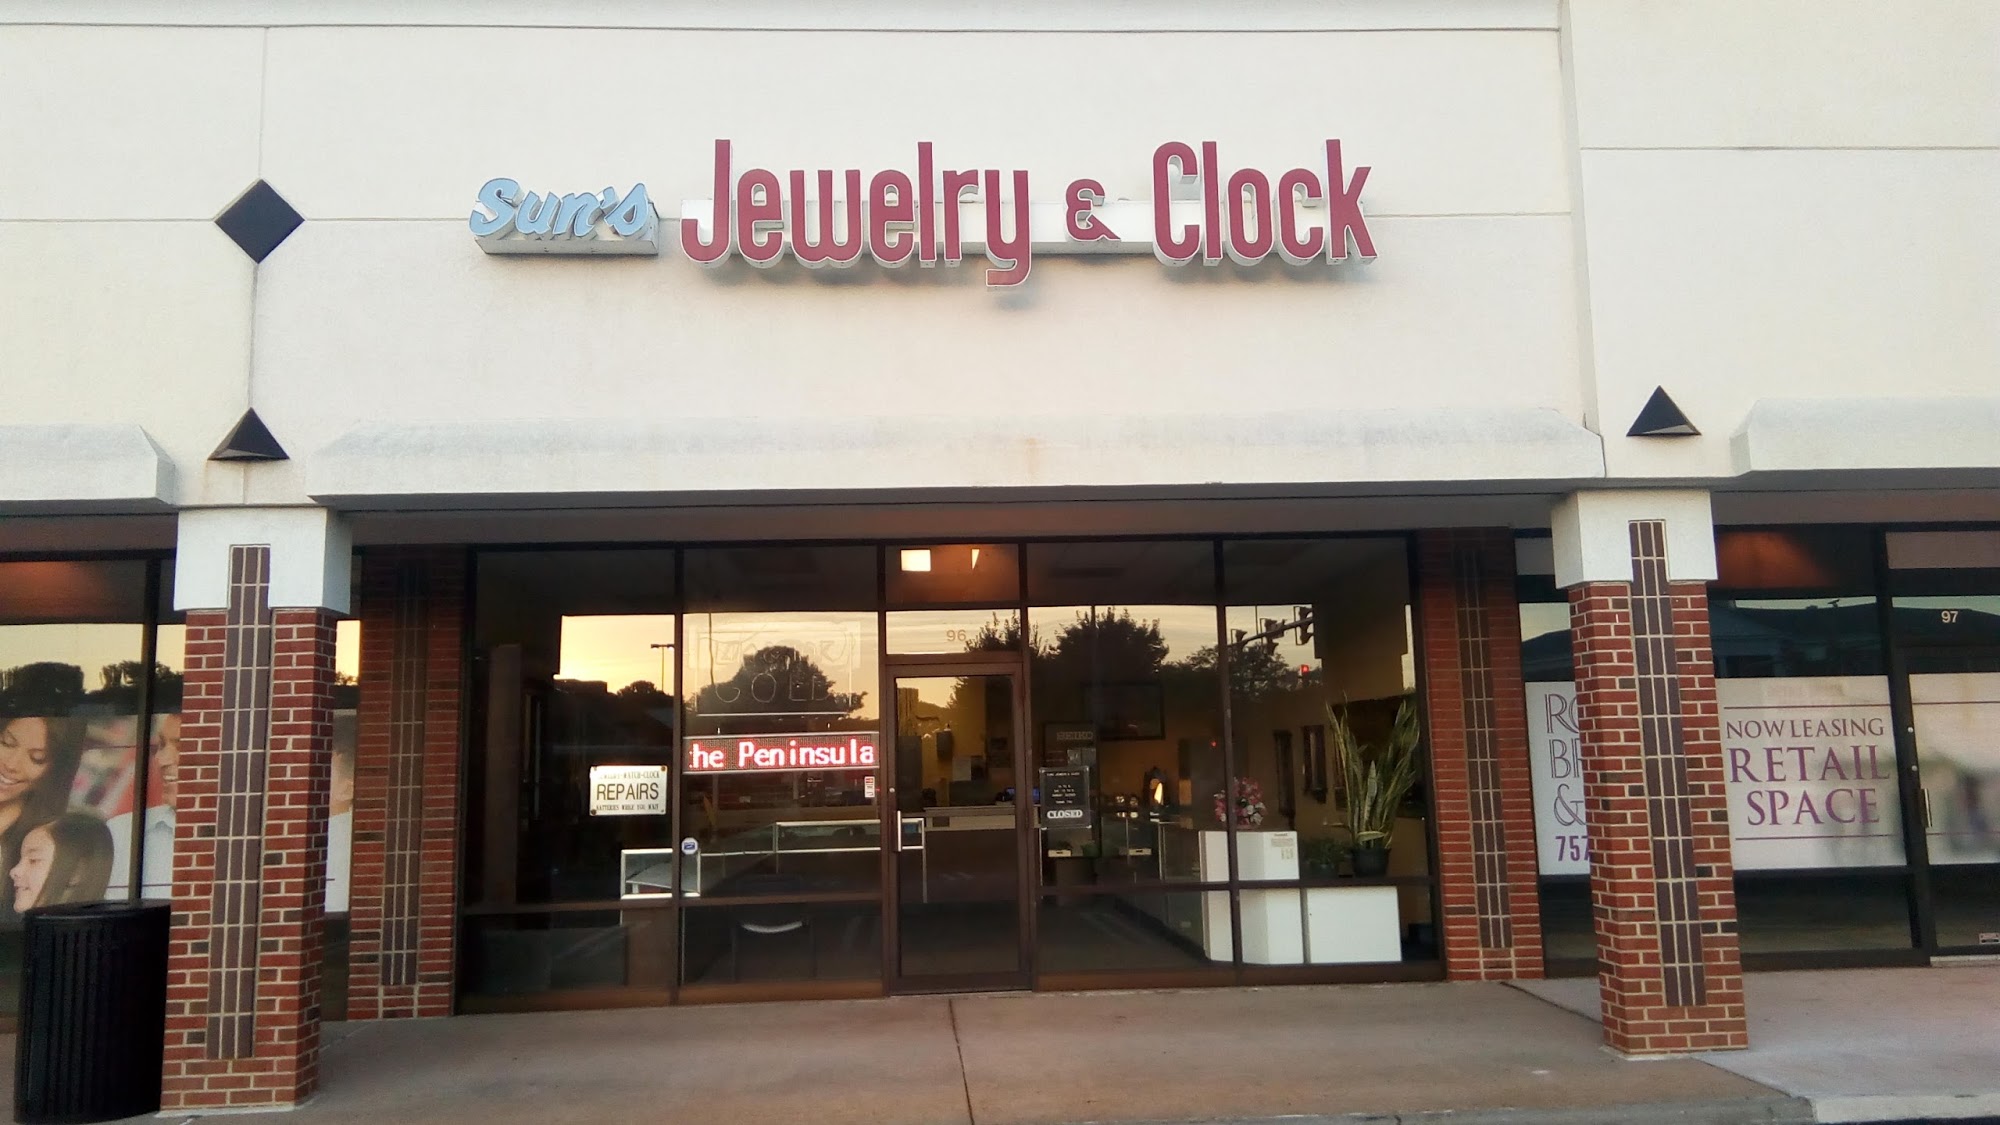 Sun's Jewelry & Clock